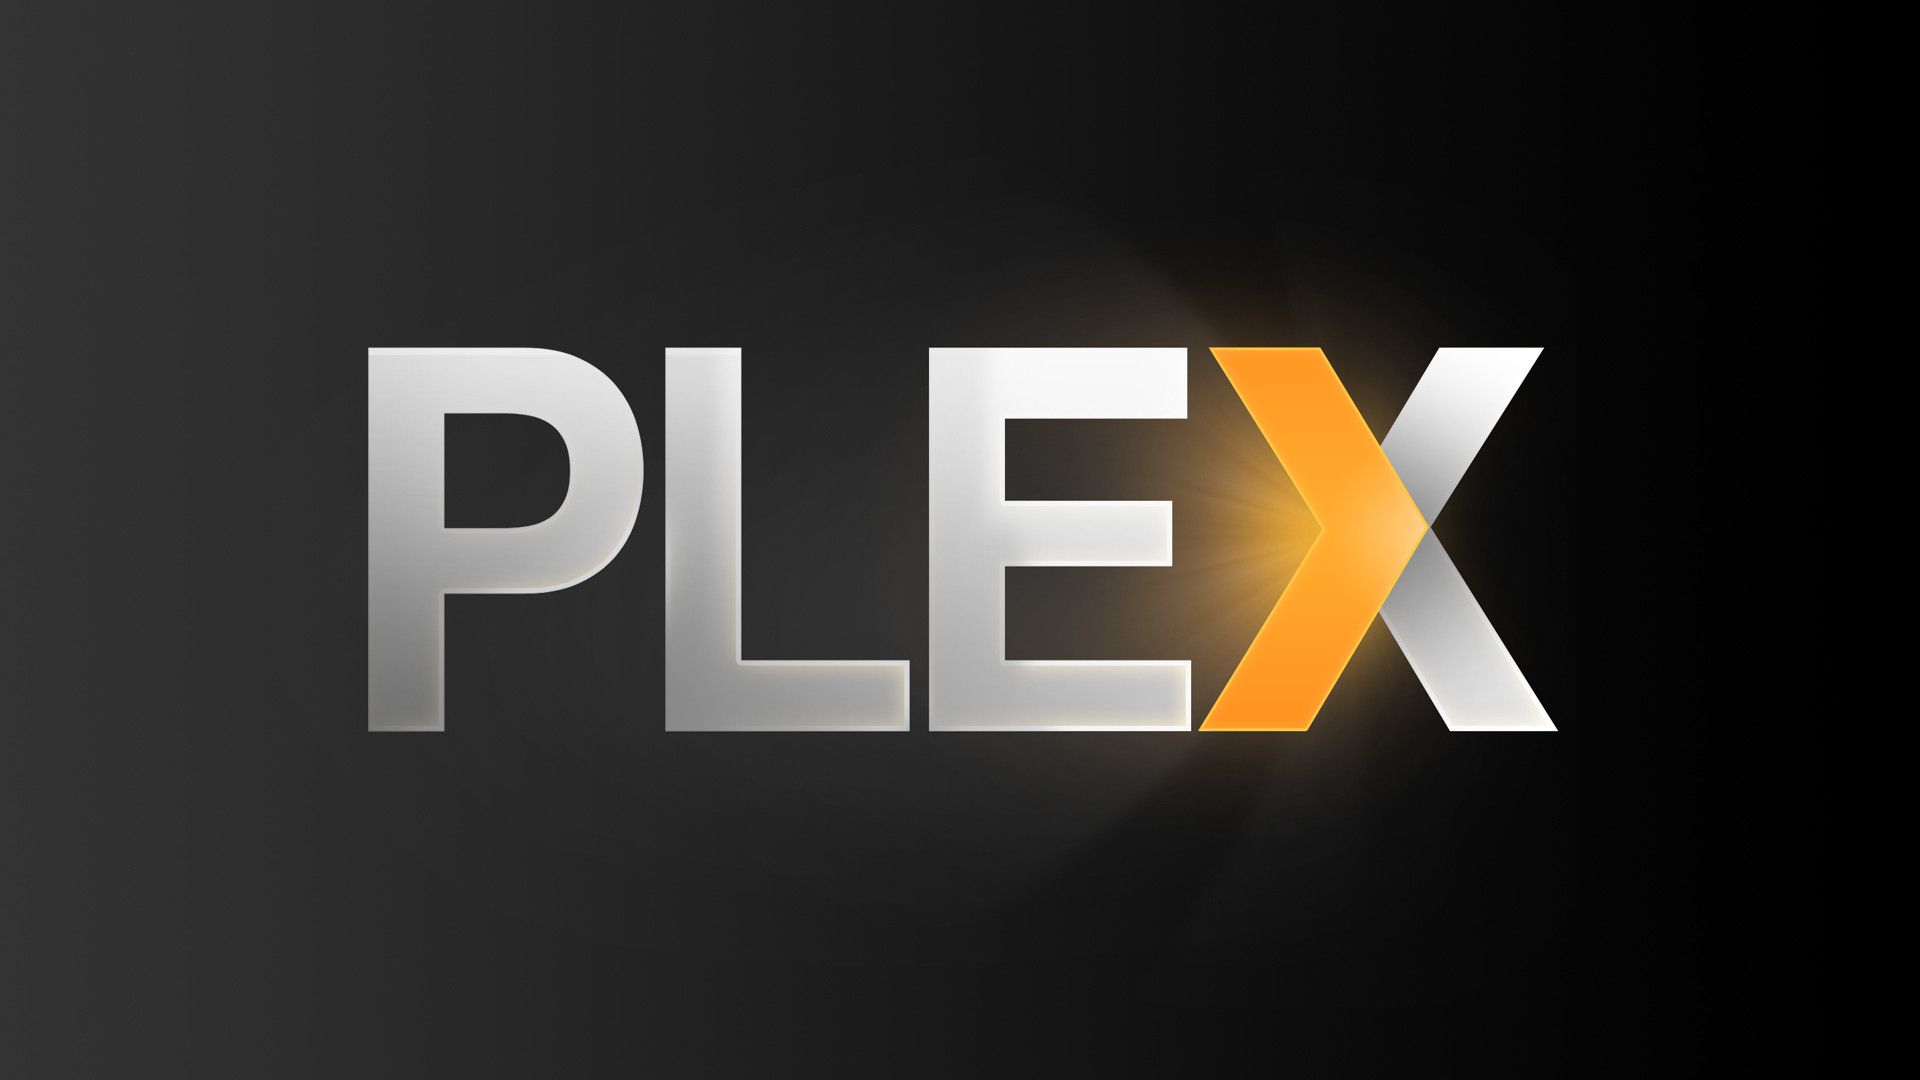 plex 4k buffering lg tv